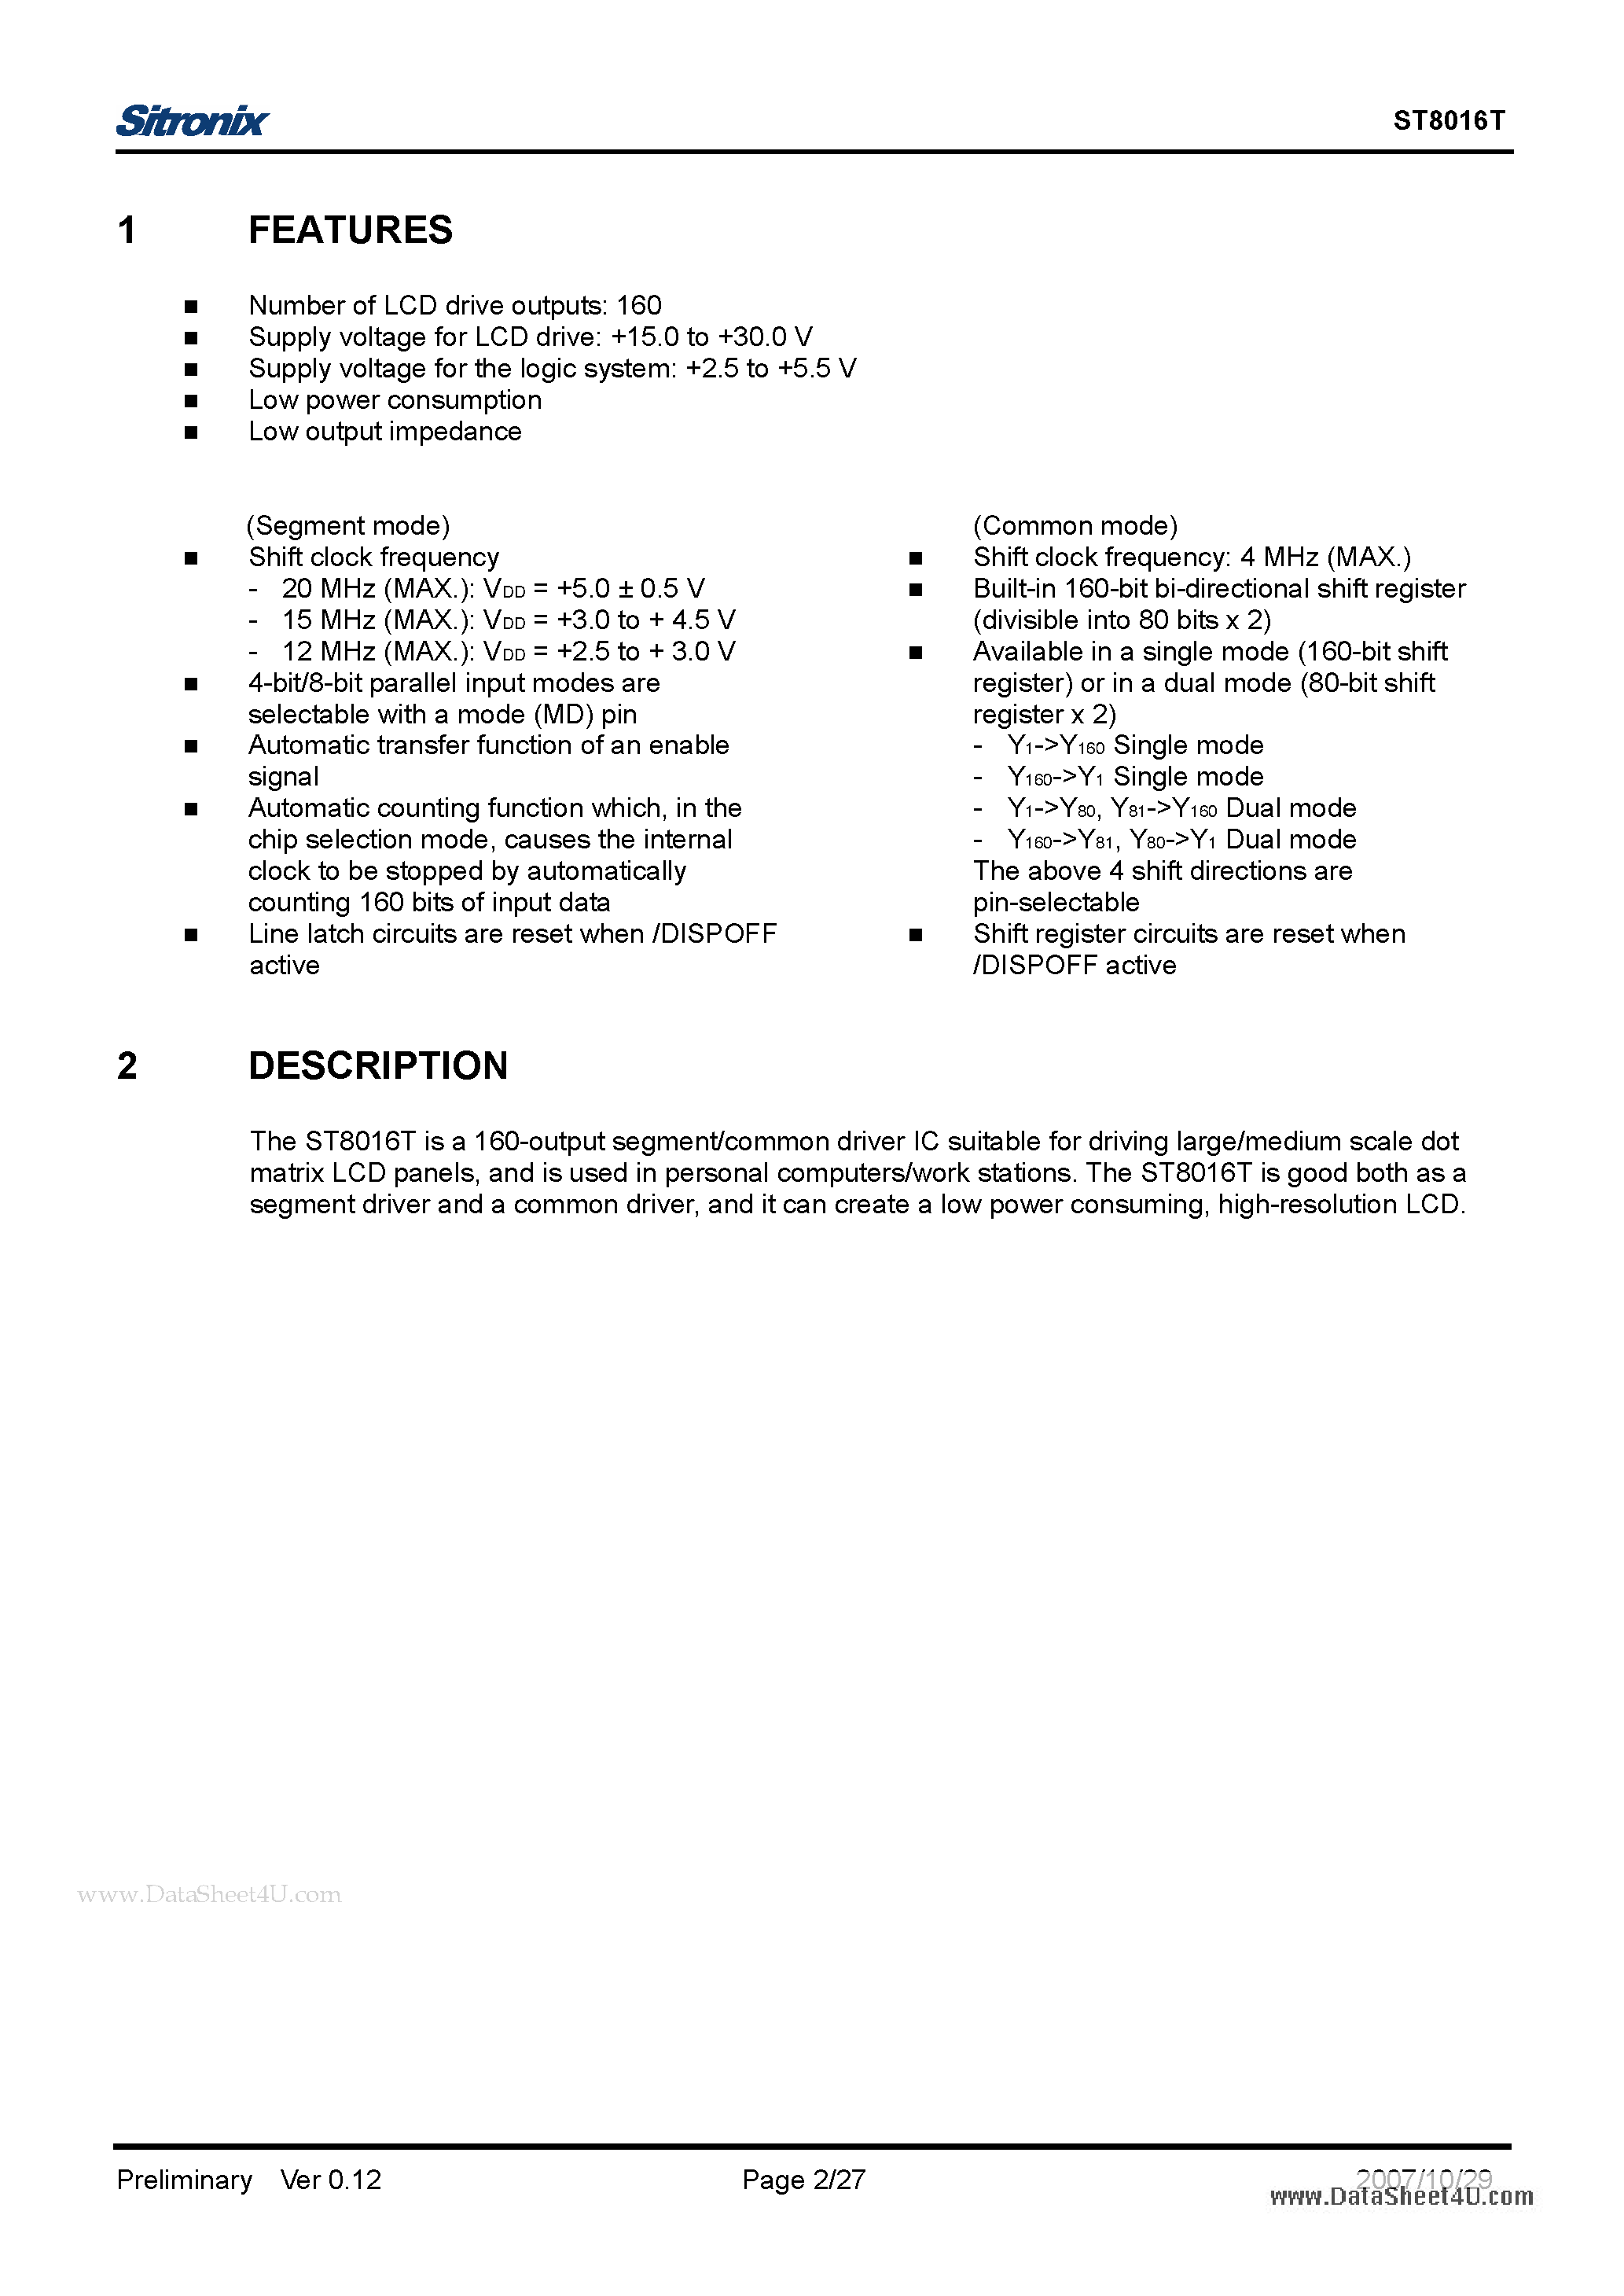 Datasheet ST8016T - COM/SEG LCD Driver page 2